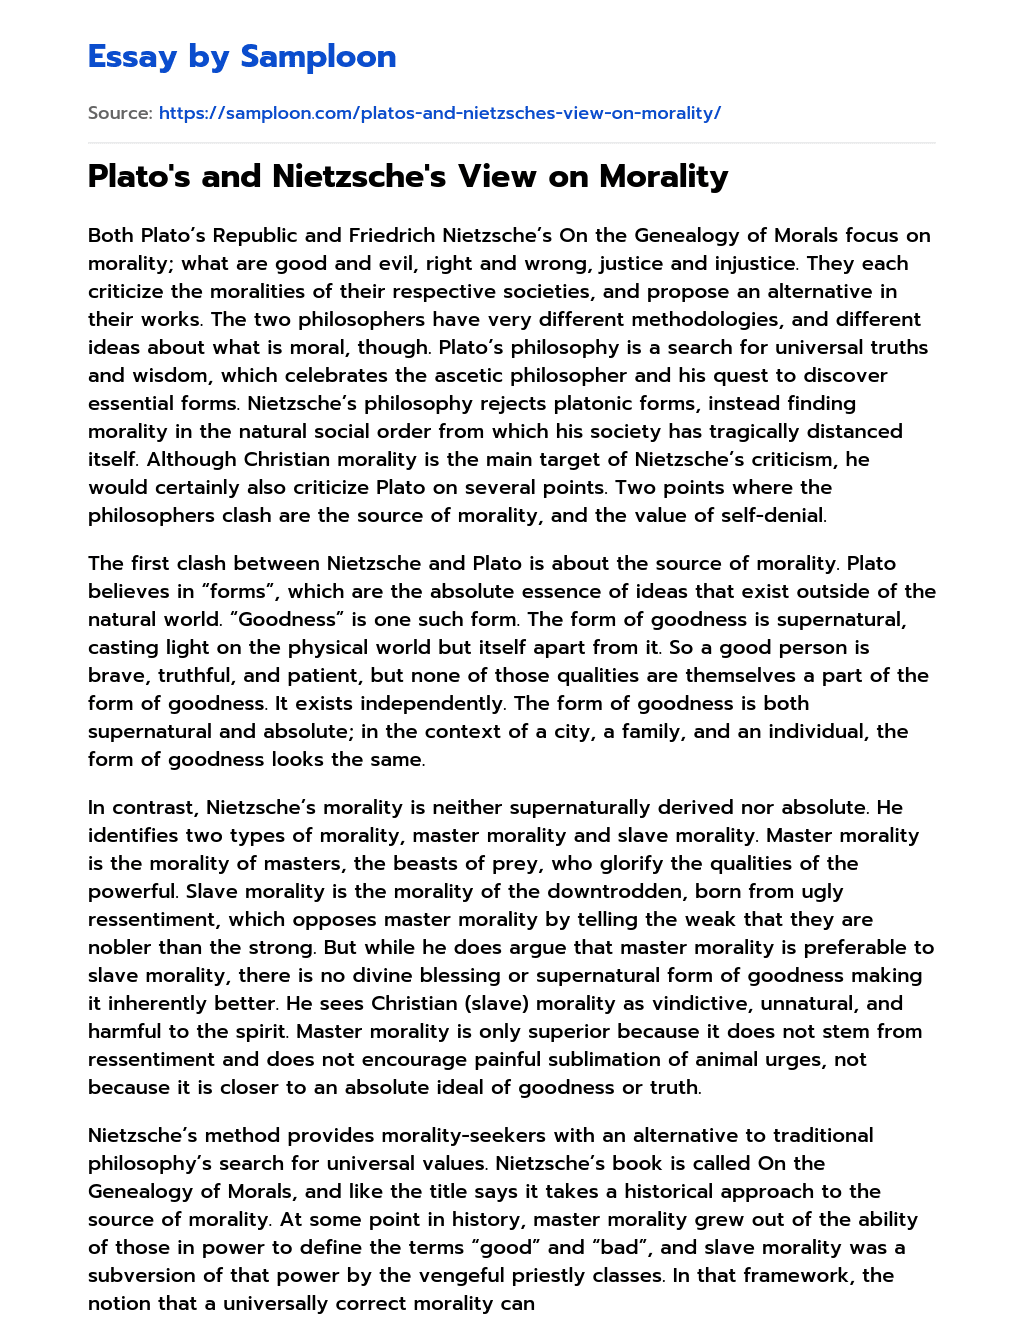 Plato’s and Nietzsche’s View on Morality essay